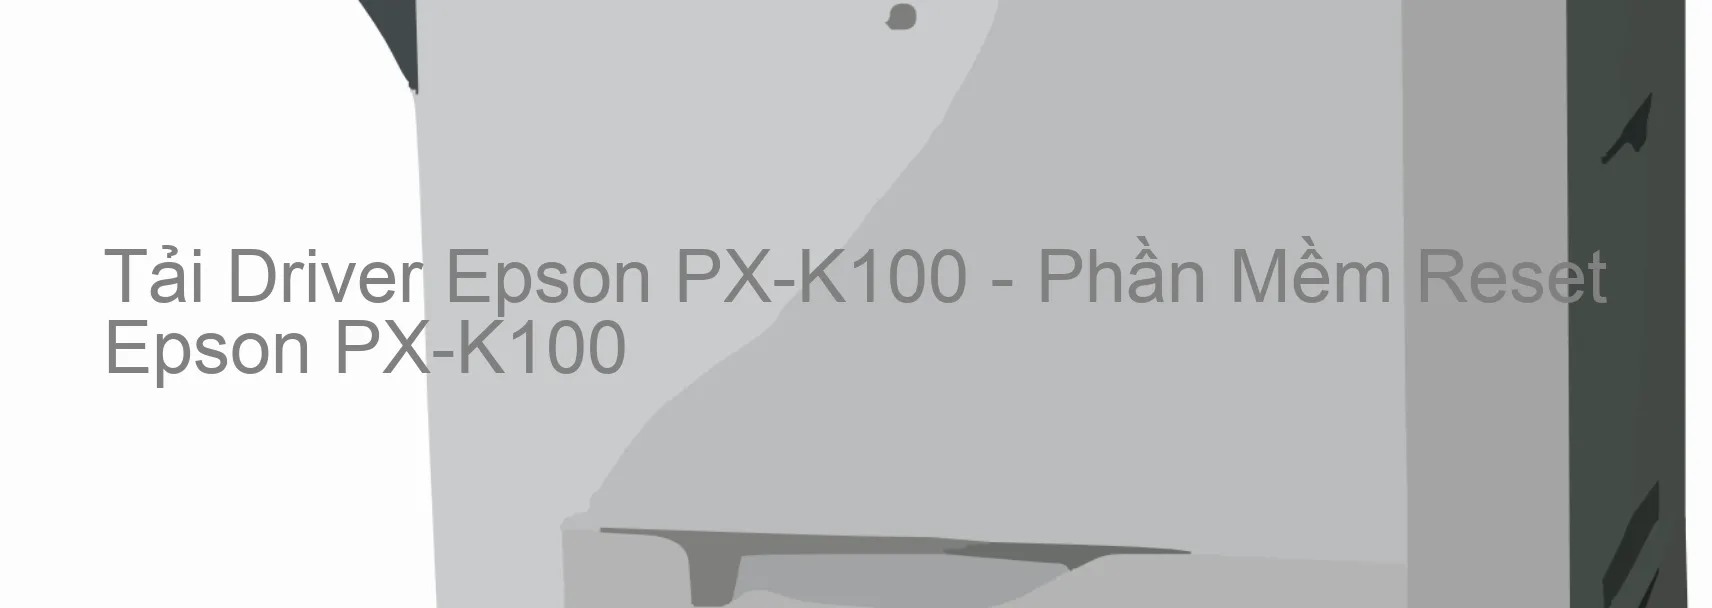 Driver Epson PX-K100, Phần Mềm Reset Epson PX-K100